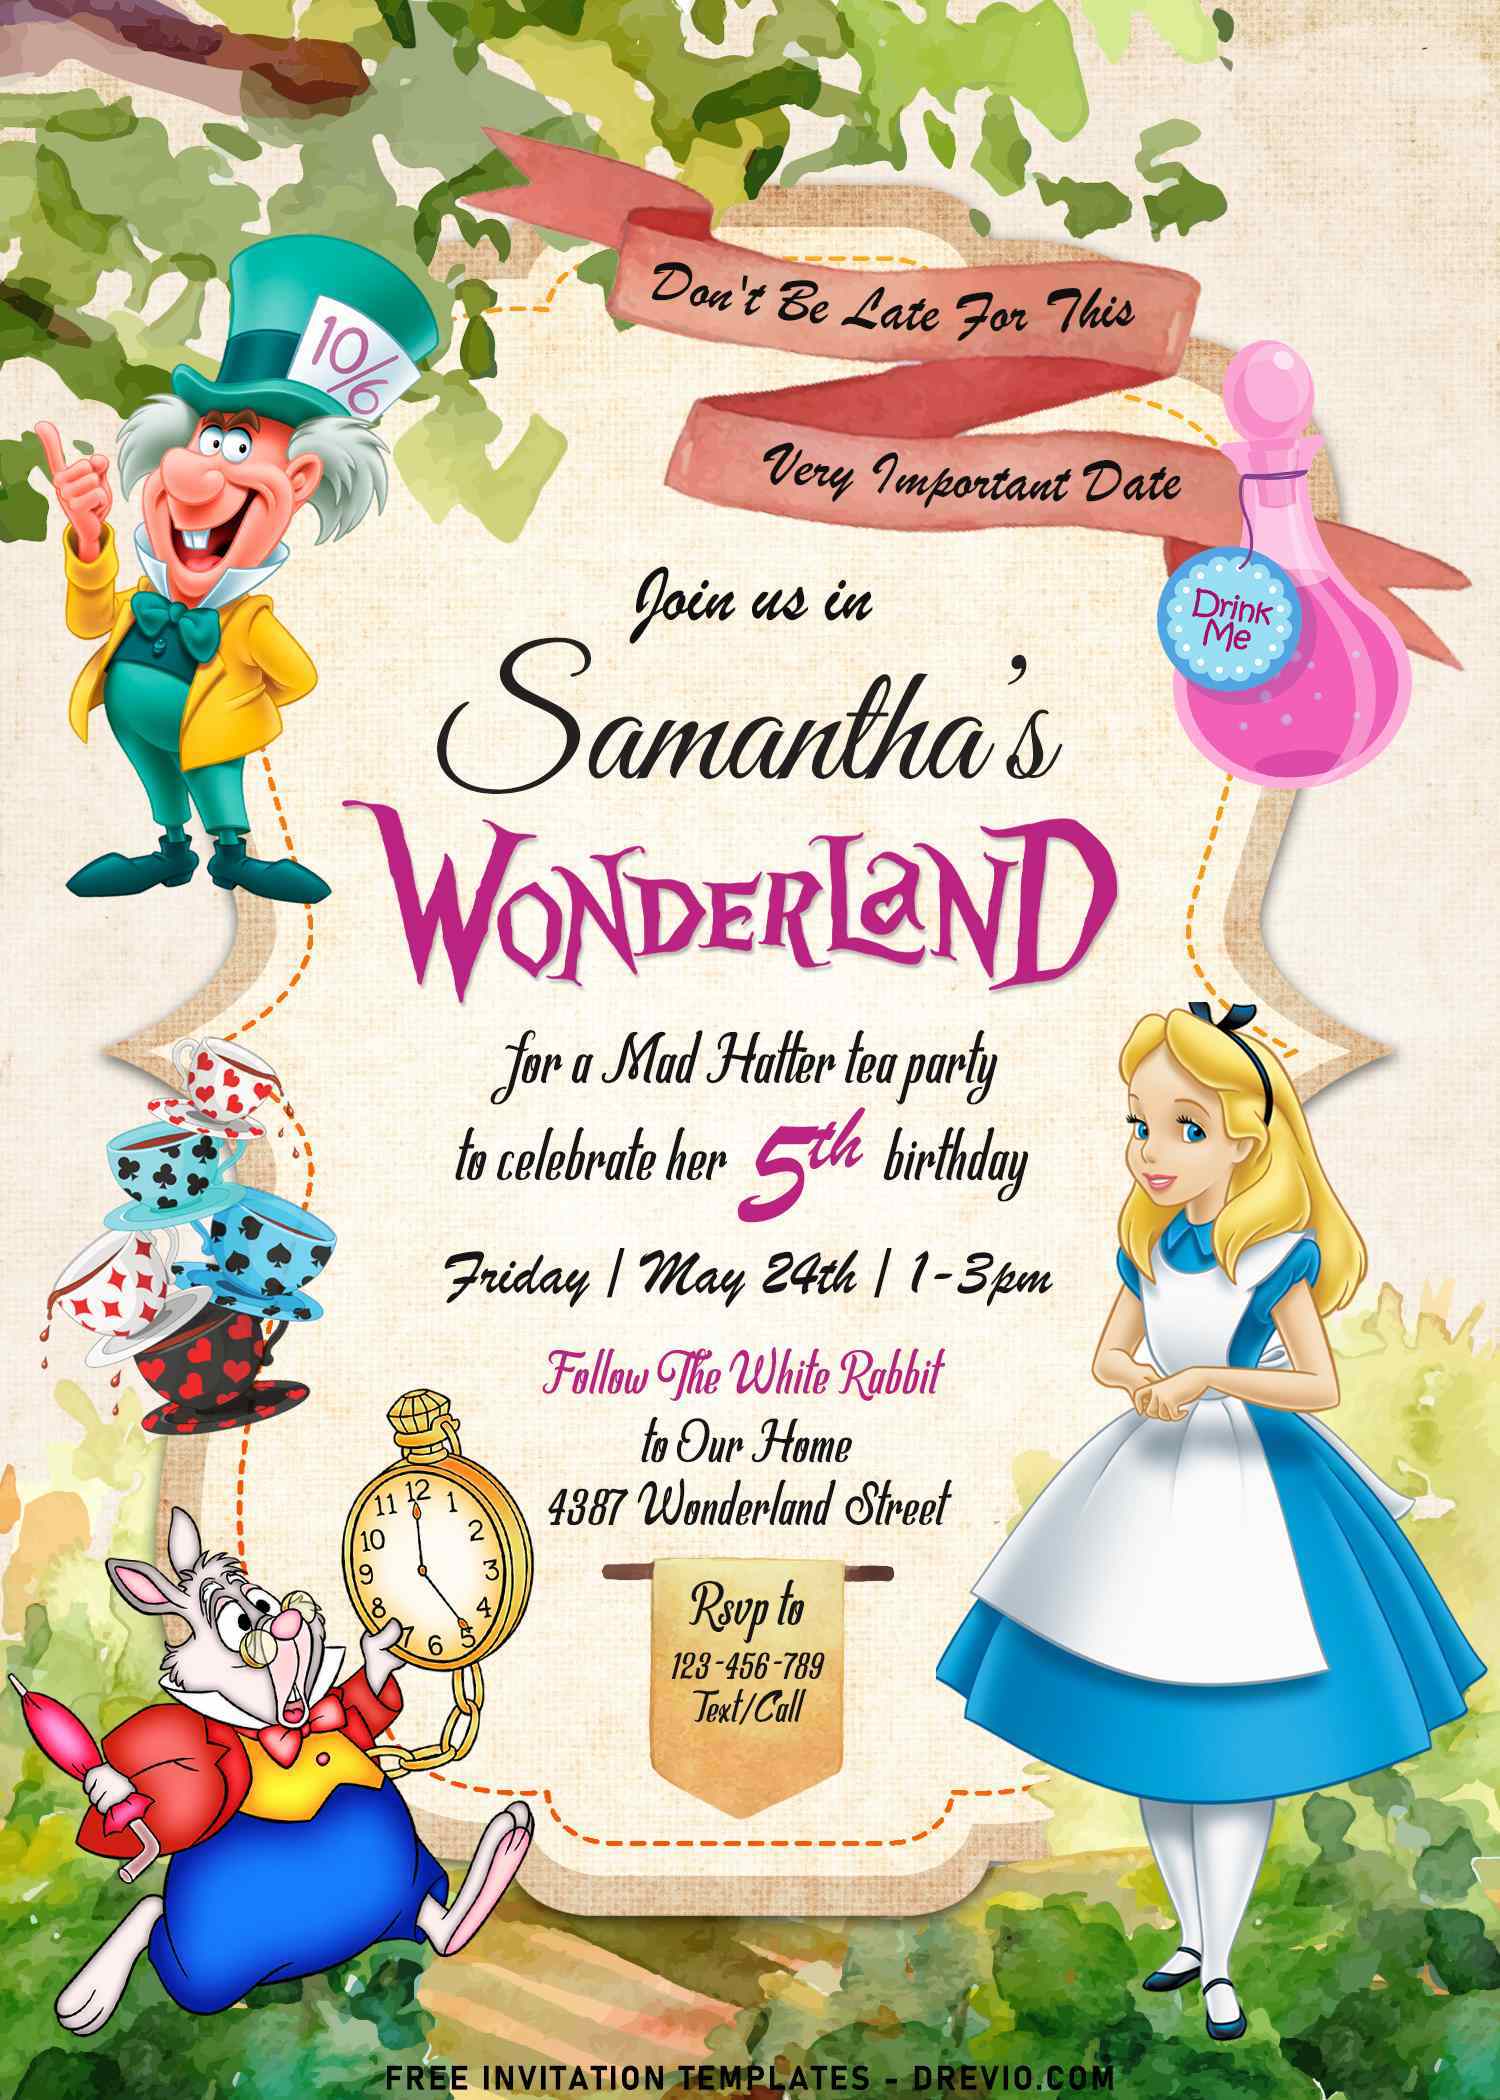 alice-in-wonderland-birthday-party-invitations-printable-free